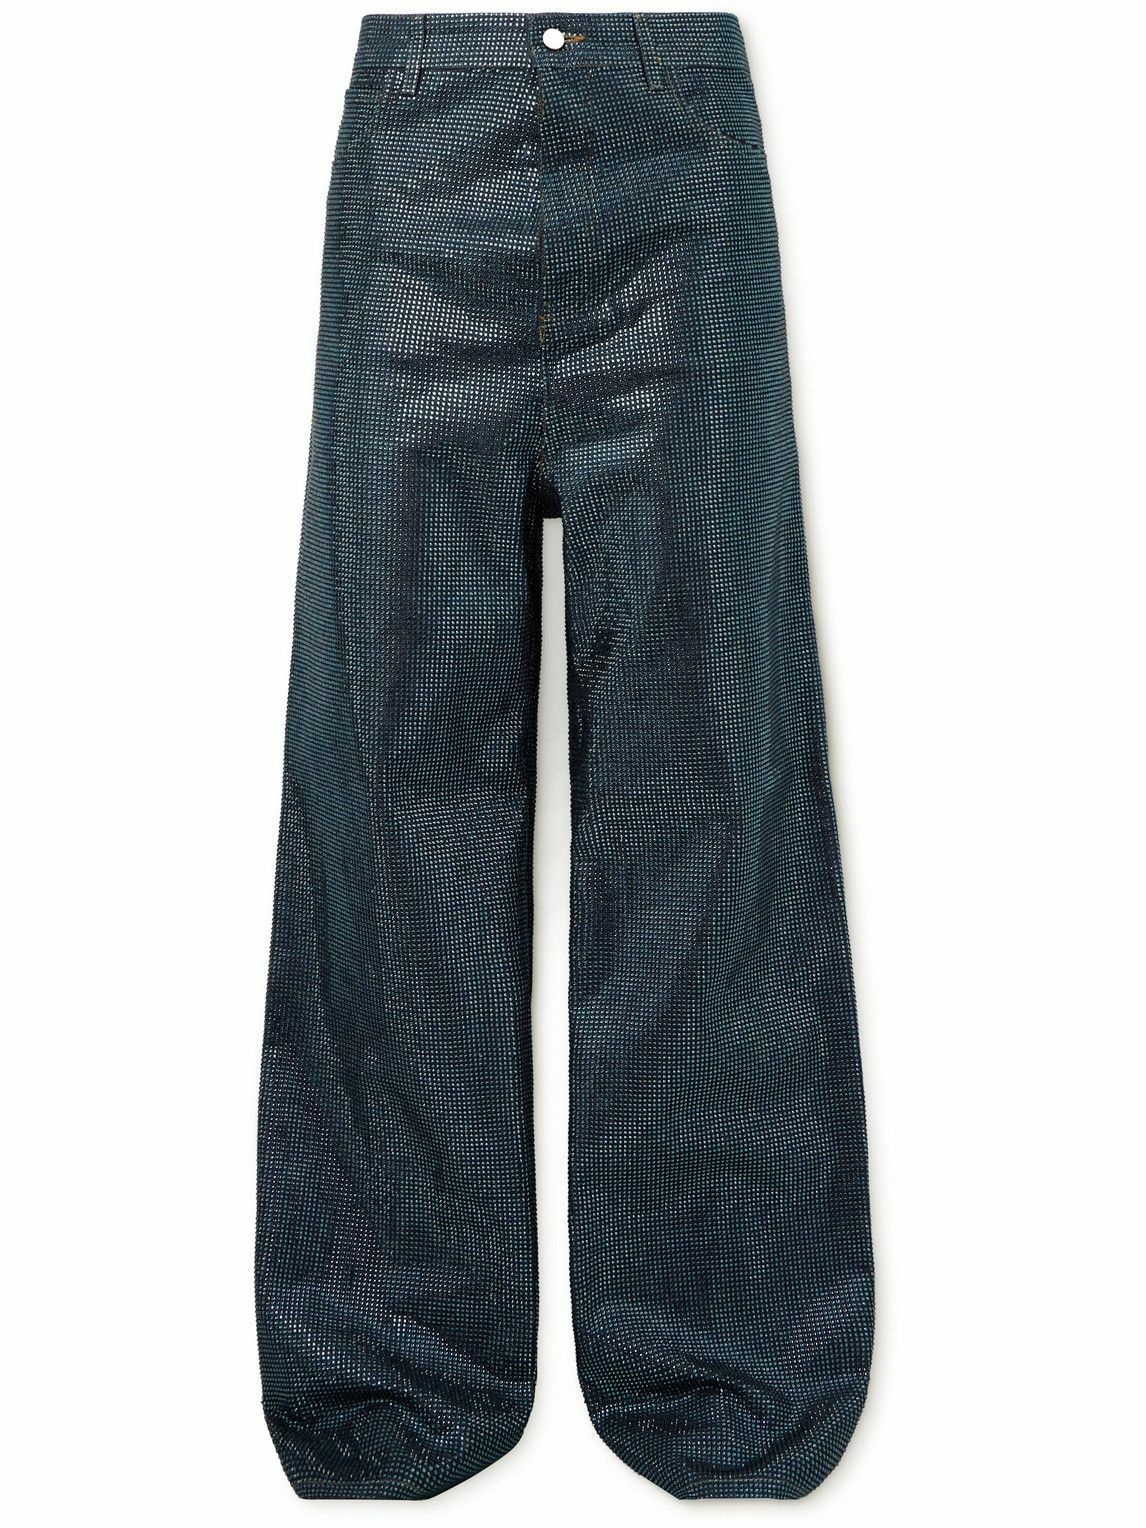 Photo: LOEWE - Wide-Leg Embellished Jeans - Blue